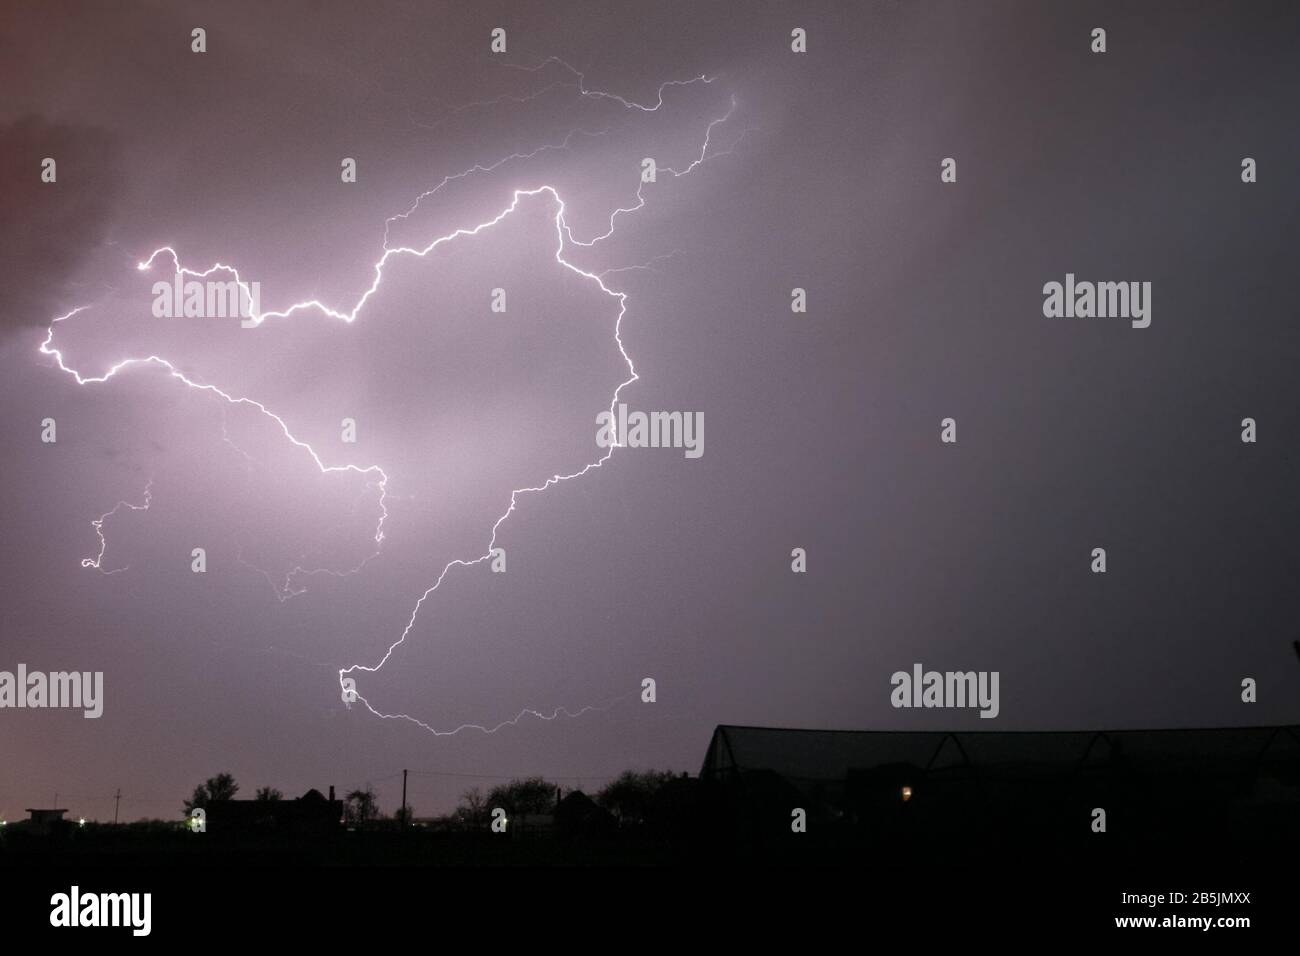 Lightning bolt in Transylvania crawls through the sky, creating a spooky atmosphere Stock Photo